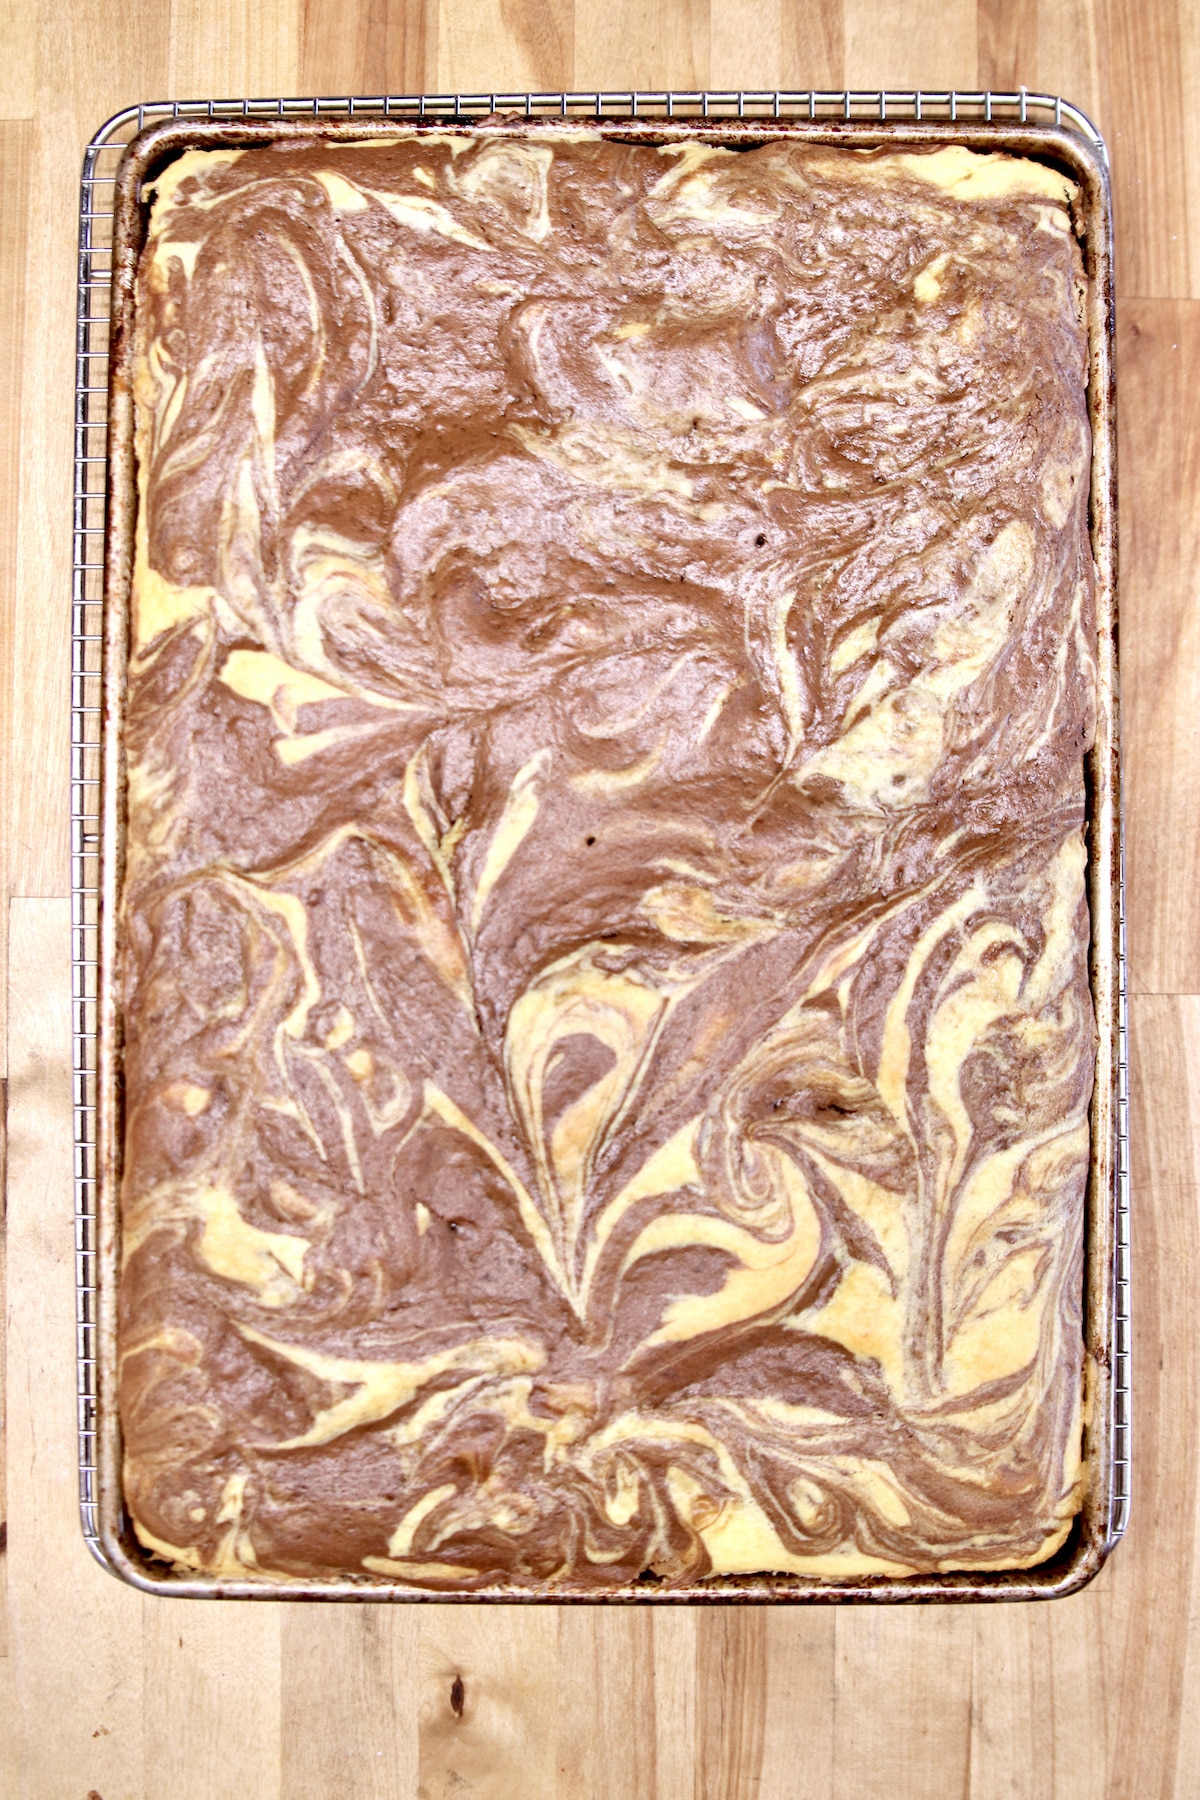 baked sheet cake - chocolate marble.